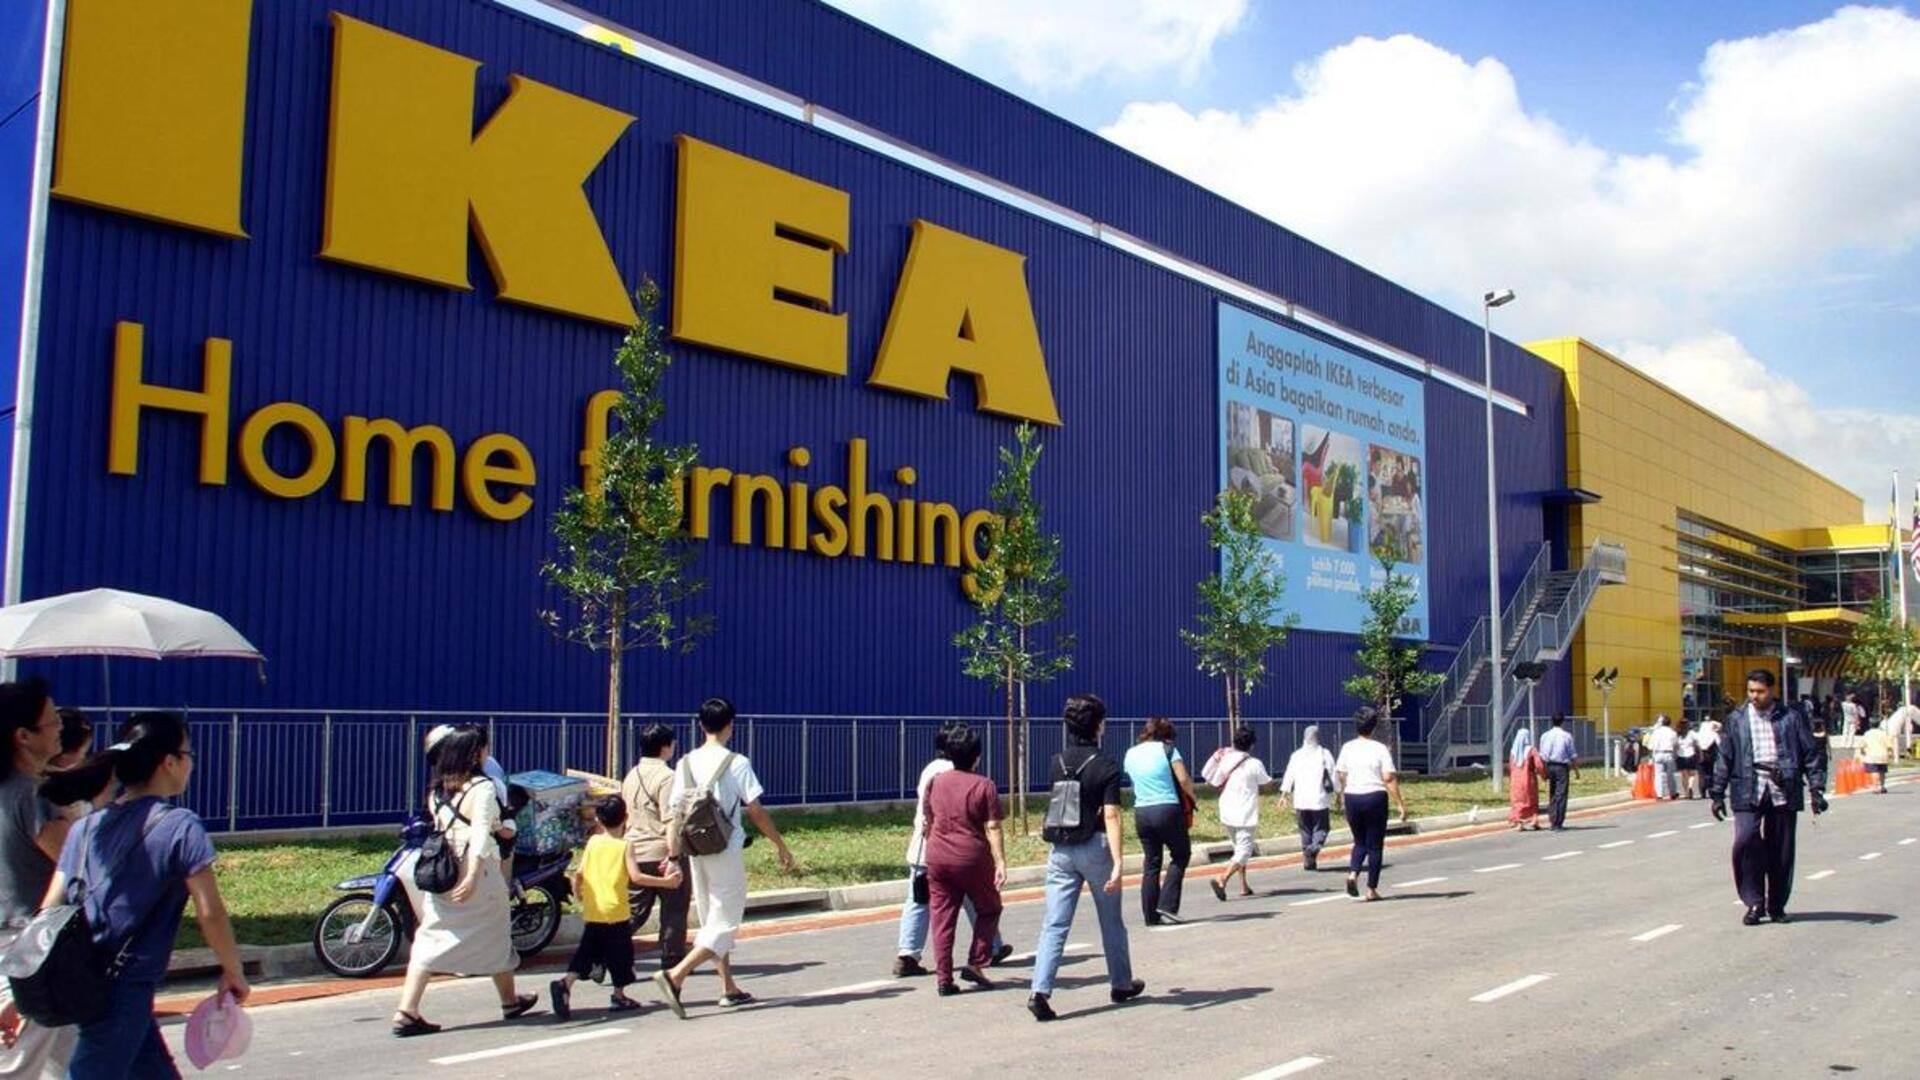 IKEA ஷோரூமில் துணிப்பைக்கான கட்டணத்திற்கு எதிர்ப்பு - ரூ.3000 இழப்பீடு வழங்க உத்தரவு 